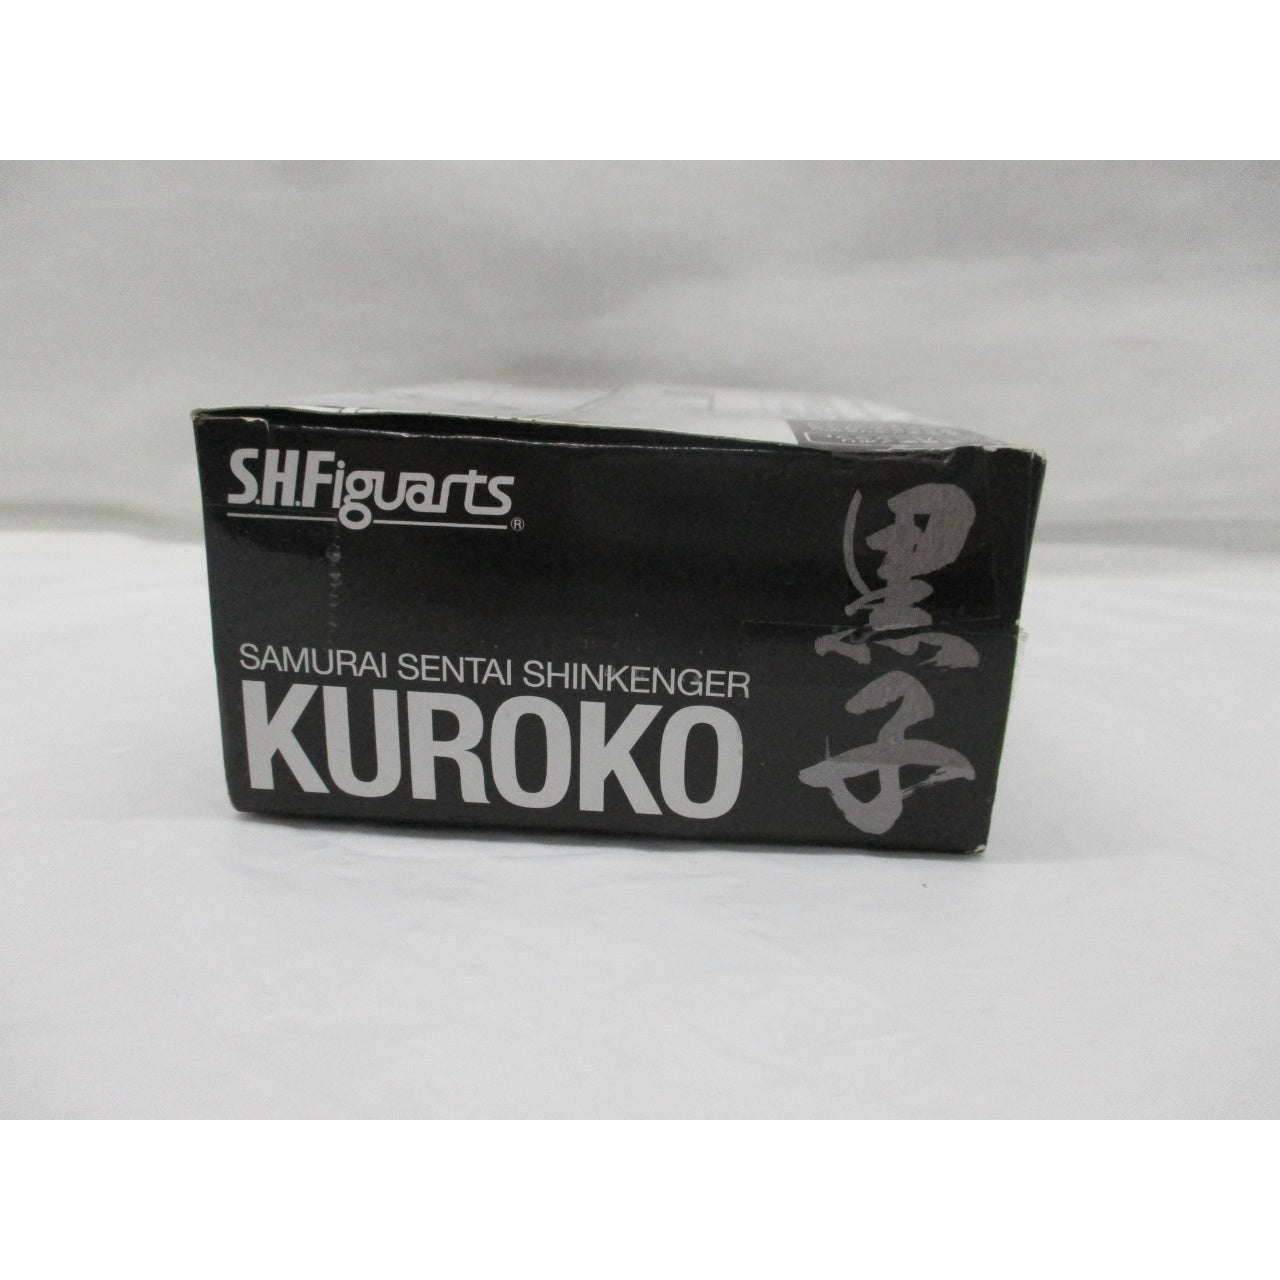 S.H.Figuarts Shinkenger Bonus Kuroko only